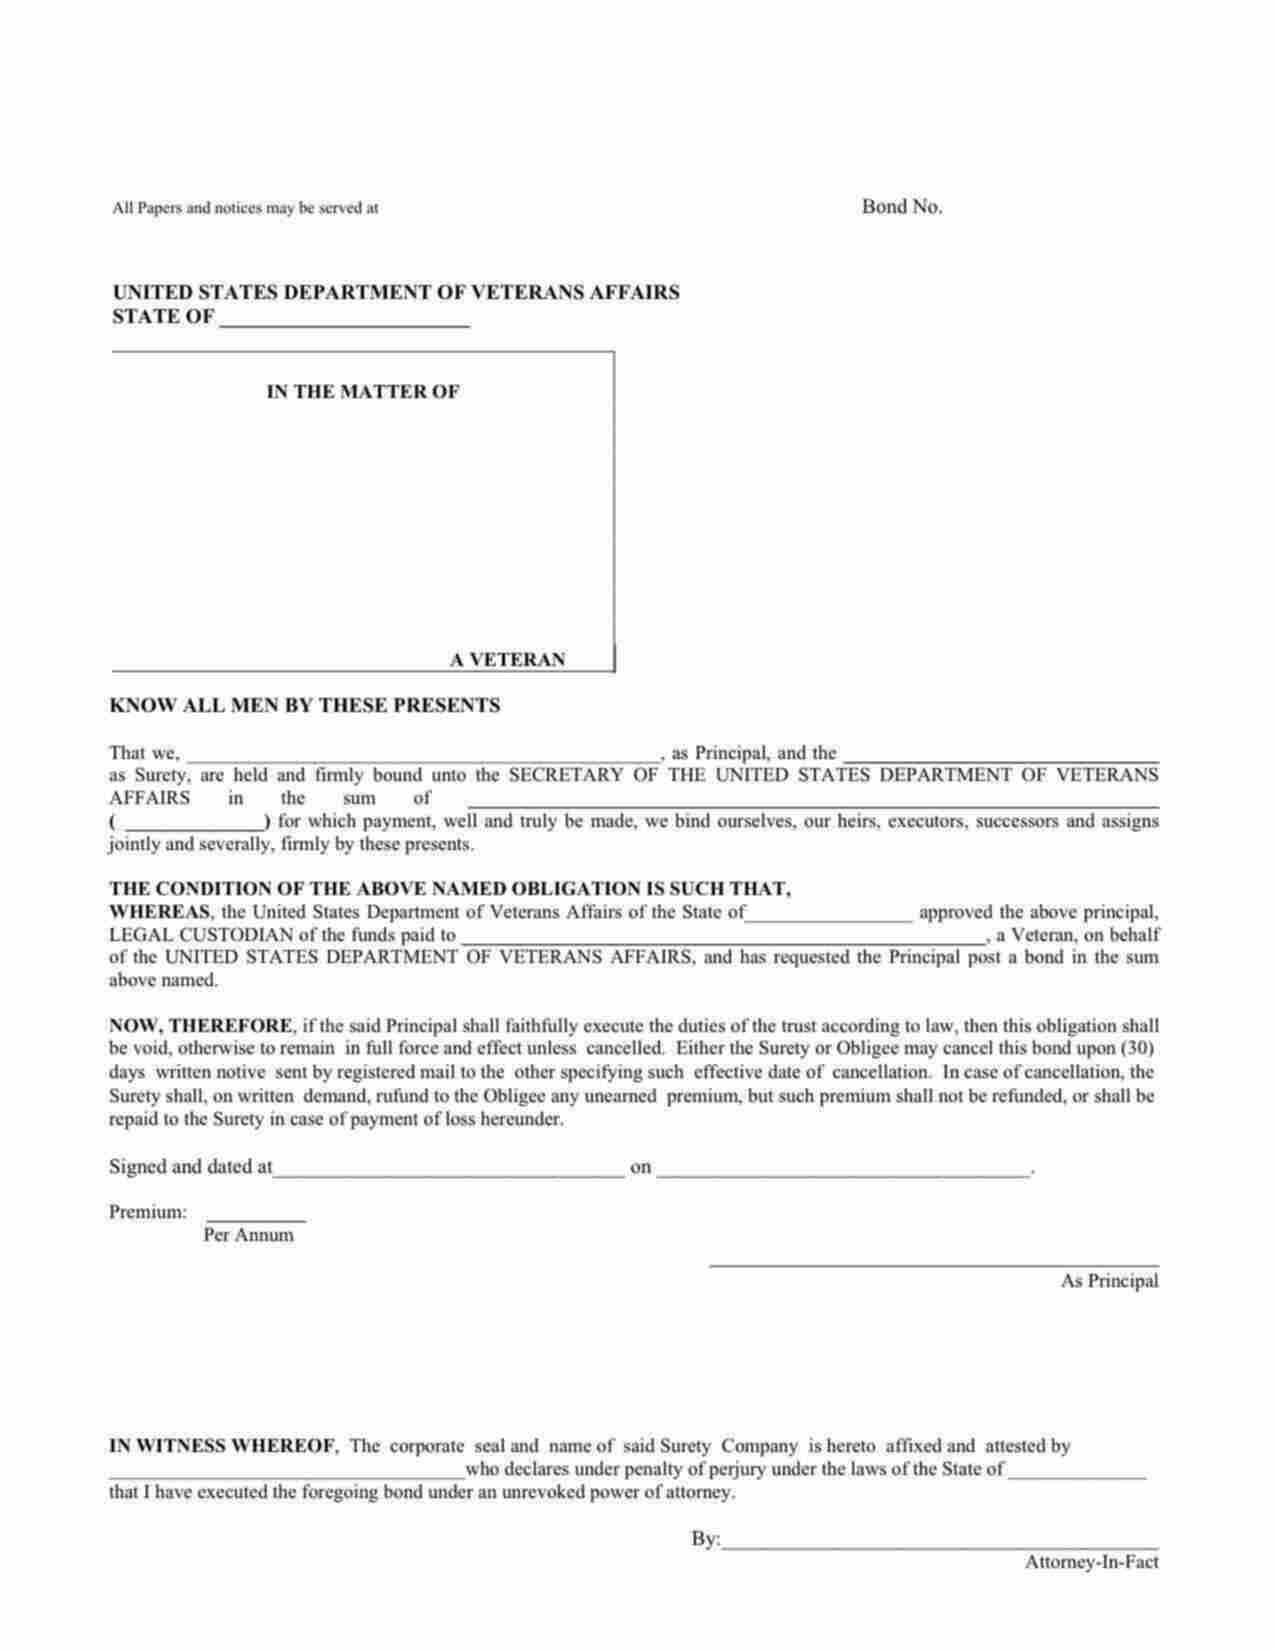 Tennessee Guardian / Legal Custodian Veterans Affairs Bond Form